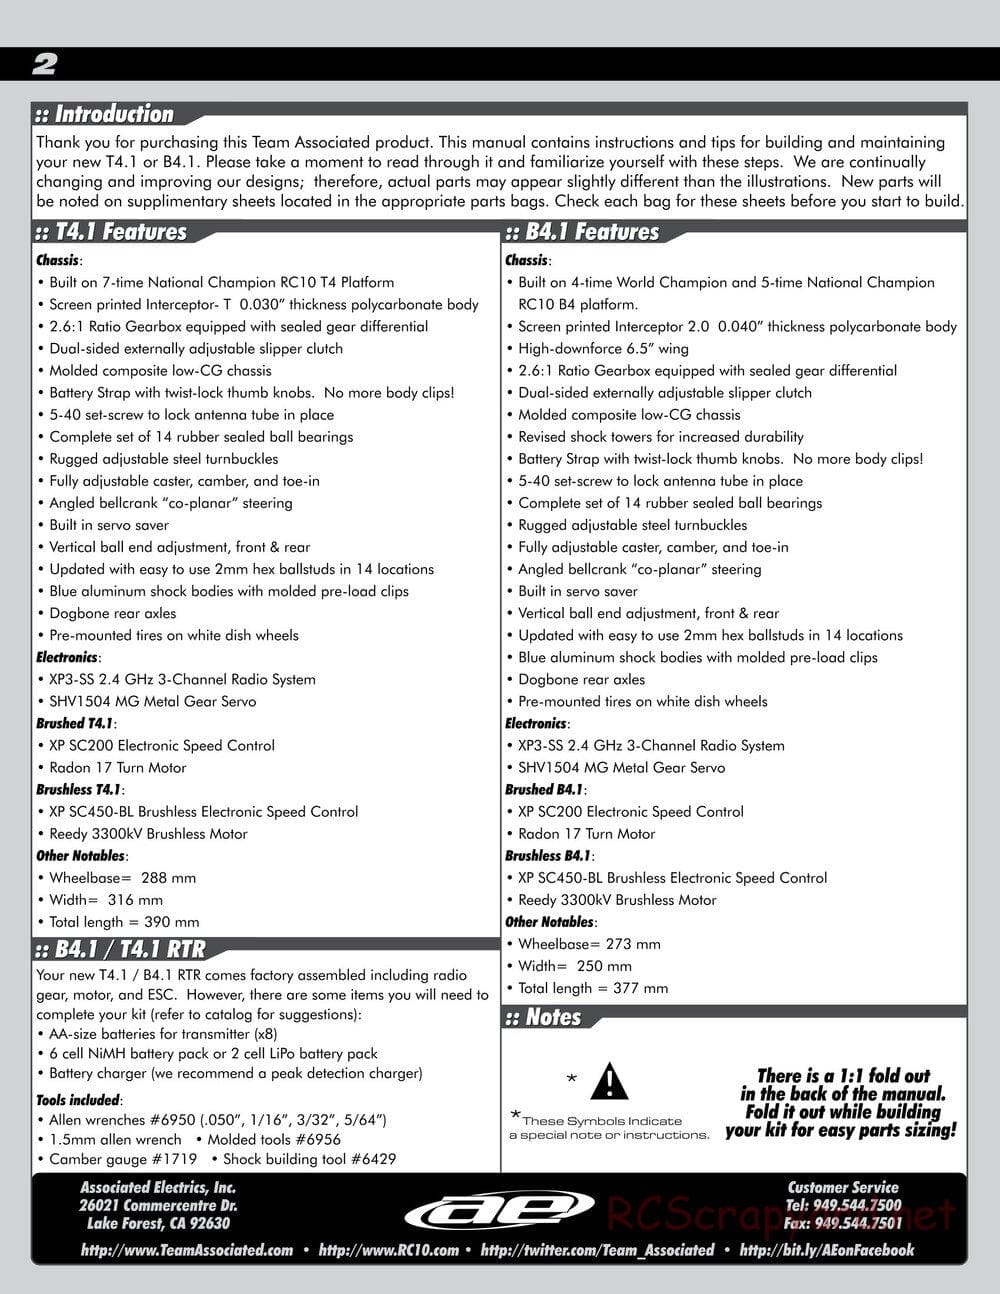 Team Associated - RC10 B4.1 RTR - Manual - Page 2